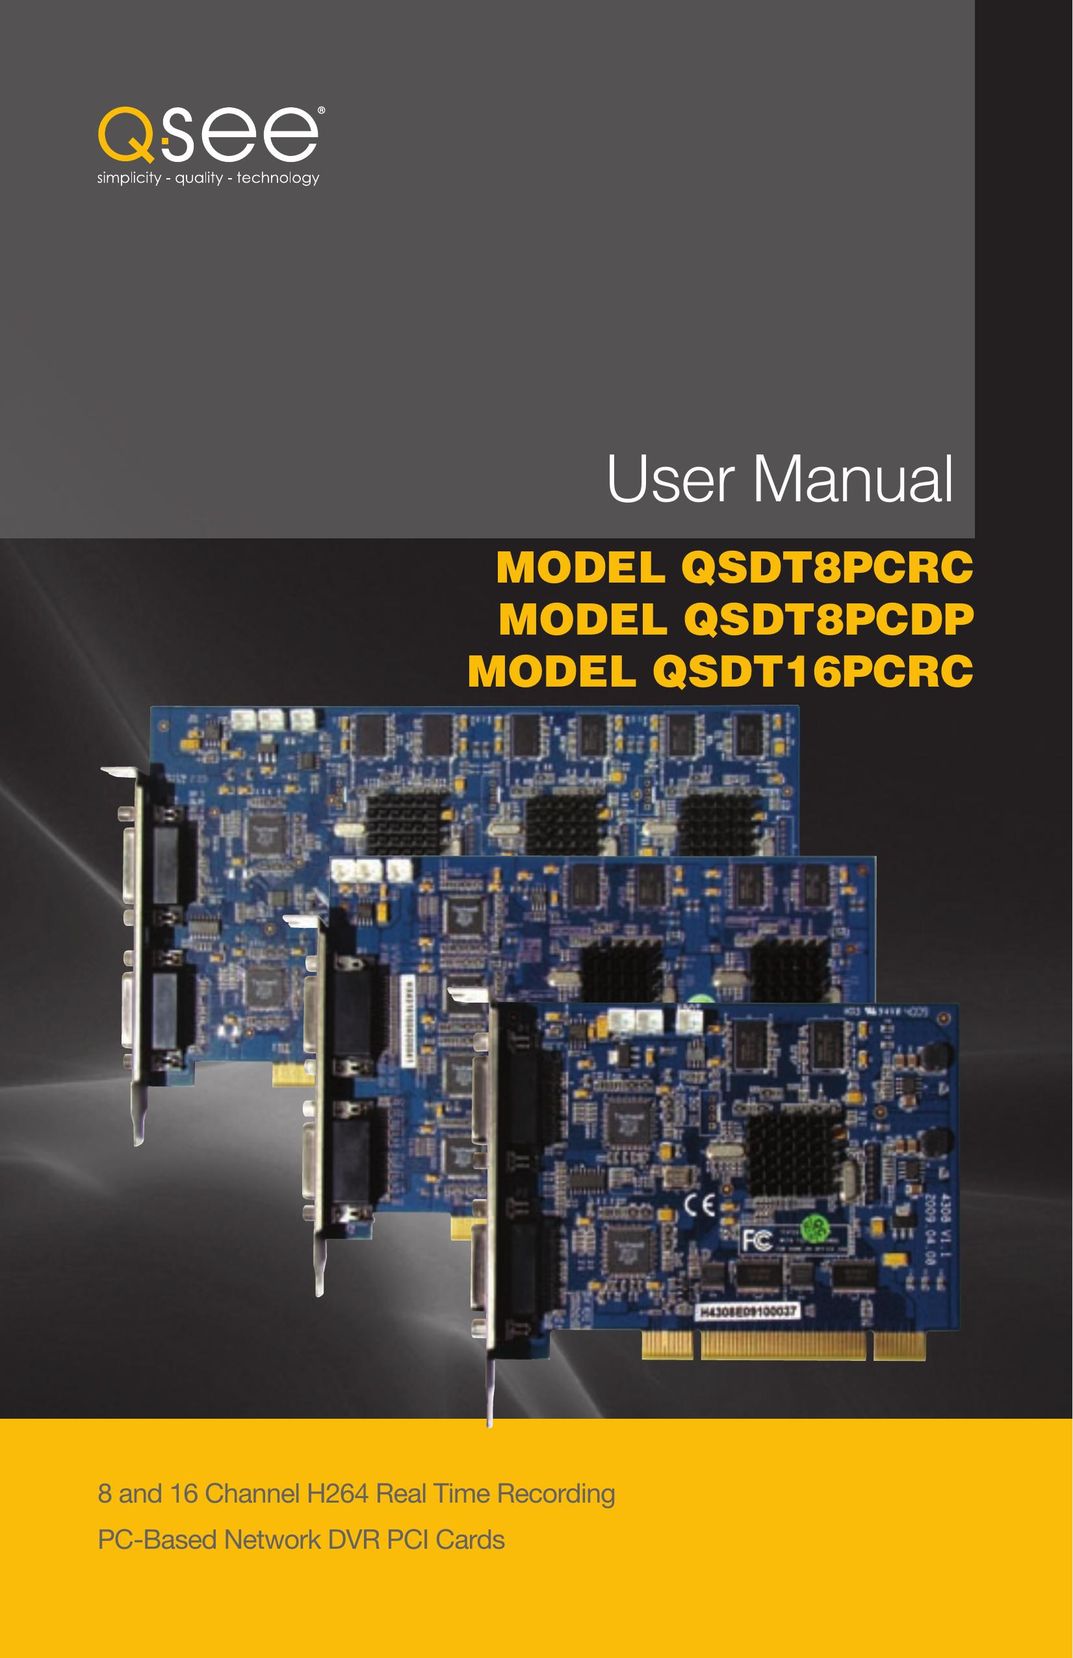 Q-See QSDT8PCRC Computer Hardware User Manual